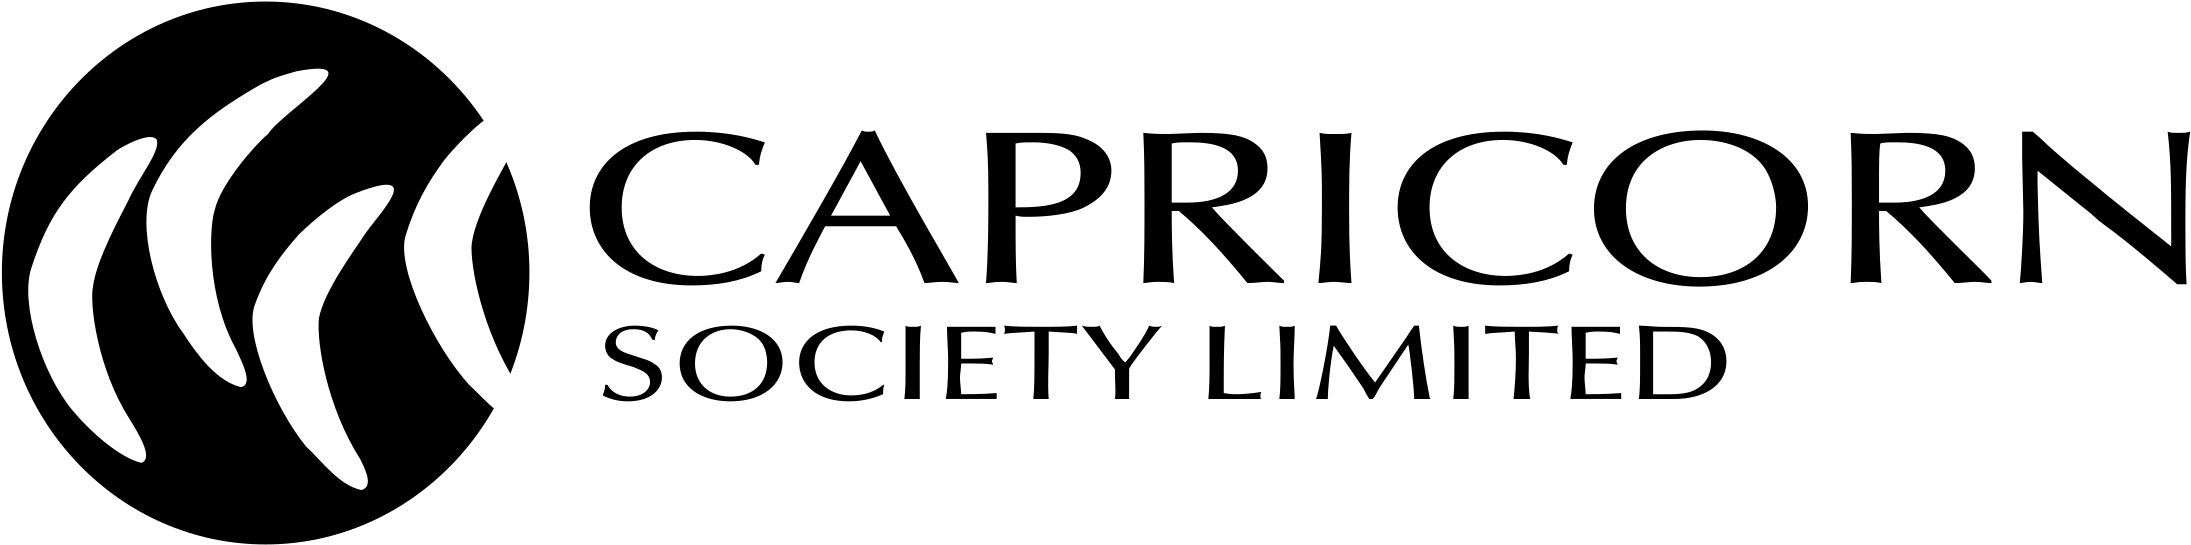 Capricorn Society Limited Logo PNG